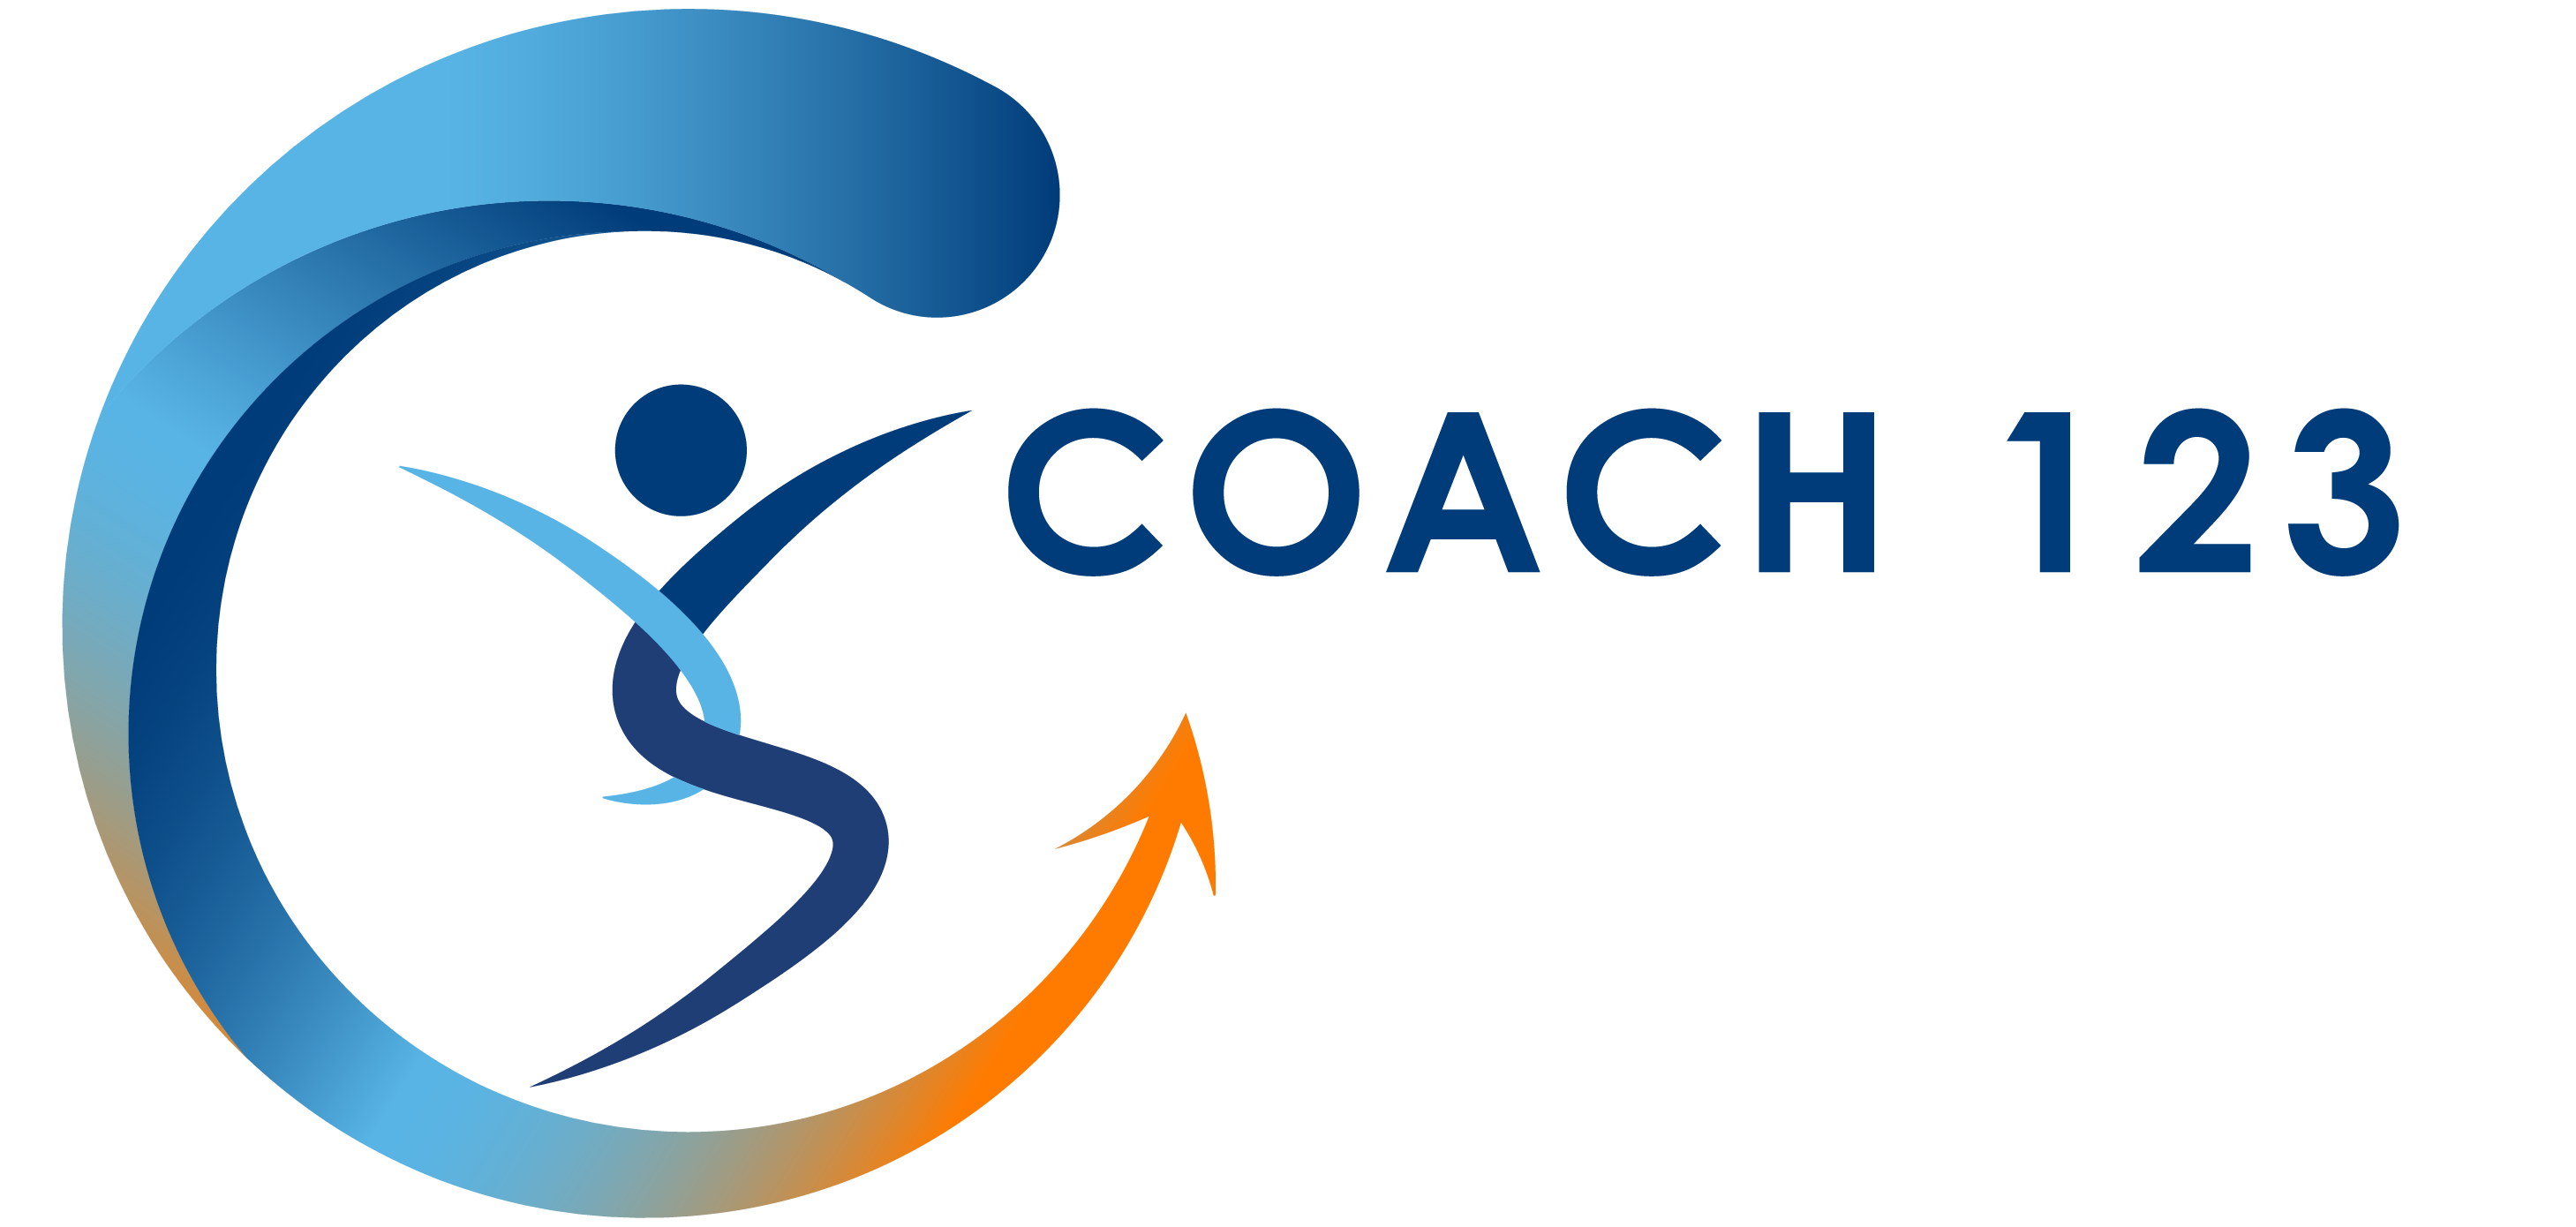 Coaching Services - Coach 123